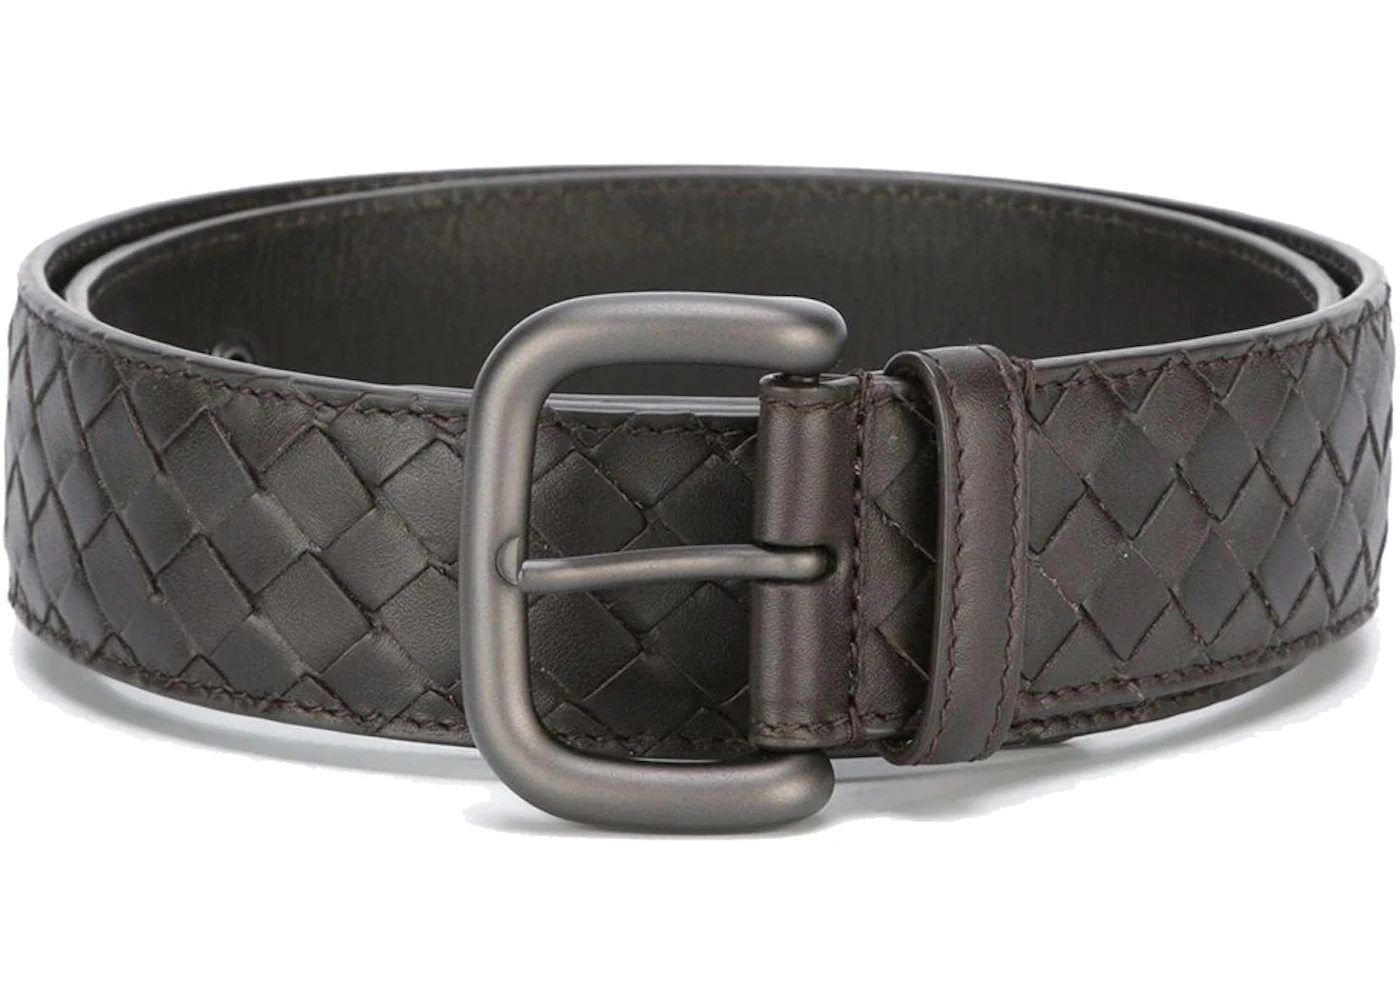 Bottega Veneta Intrecciato Leather Belt Brown in Leather - US